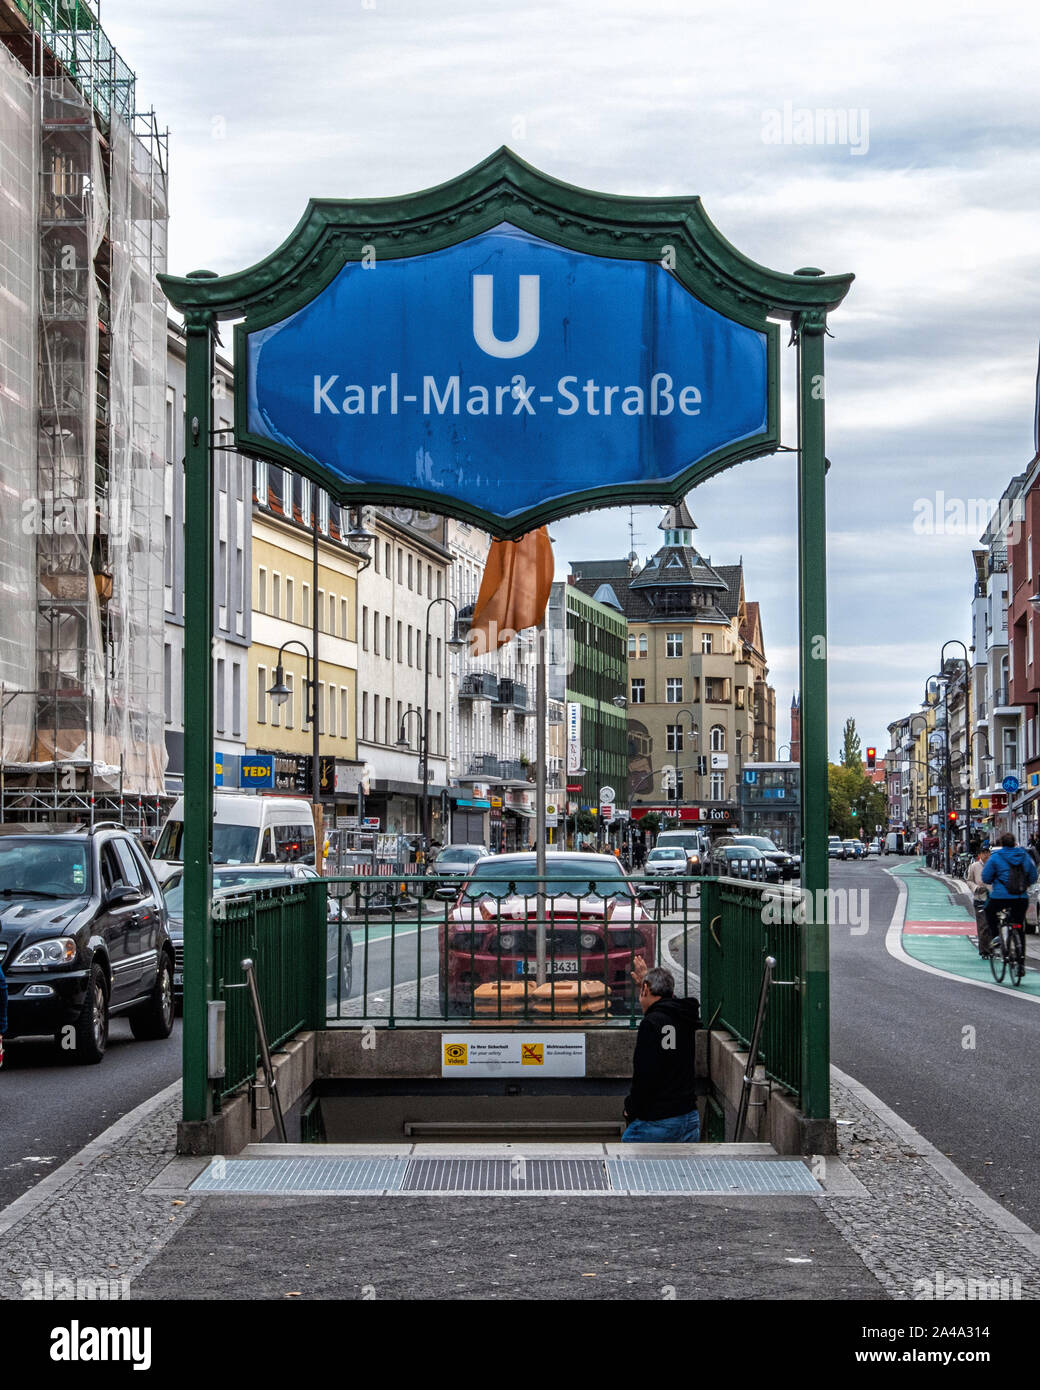 Karl marx strasse u bahn underground railway station hi-res stock  photography and images - Alamy